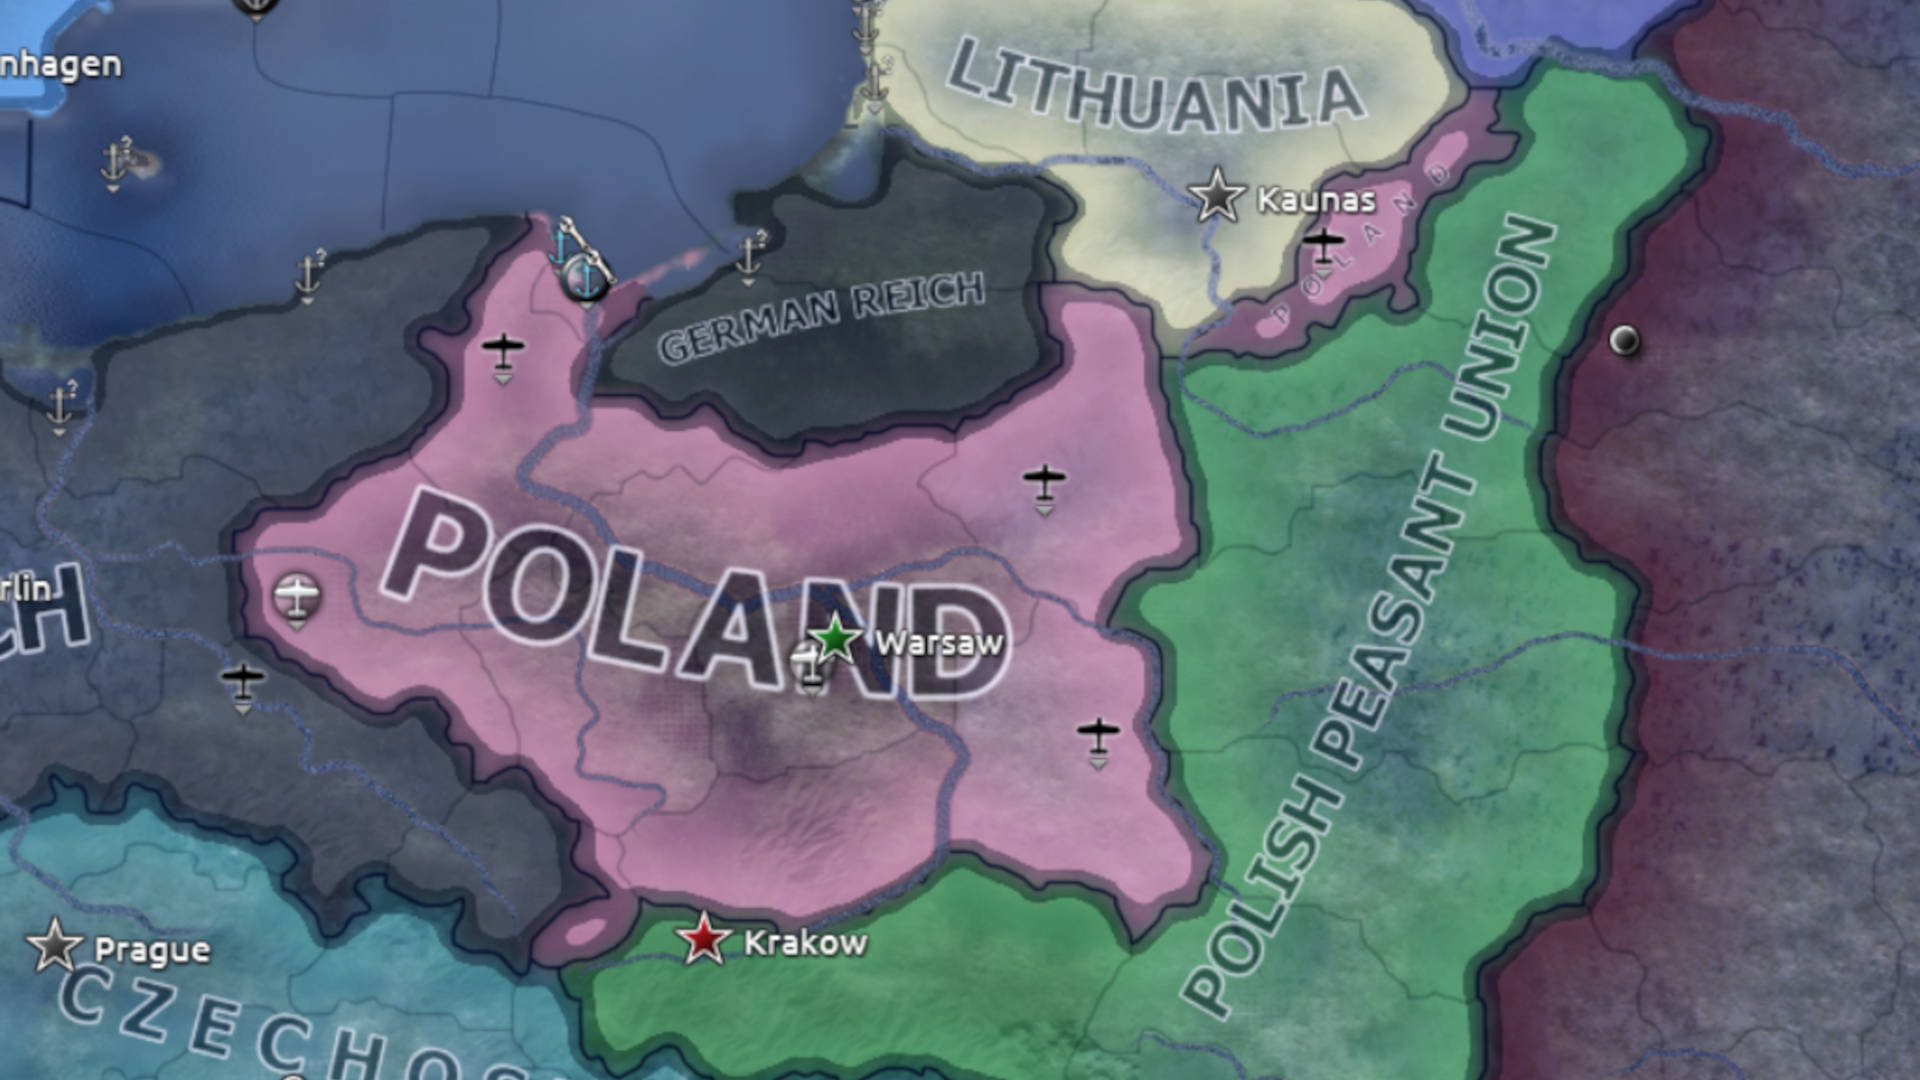 Next Hearts of Iron 4 update entirely overhauls Poland's focus tree